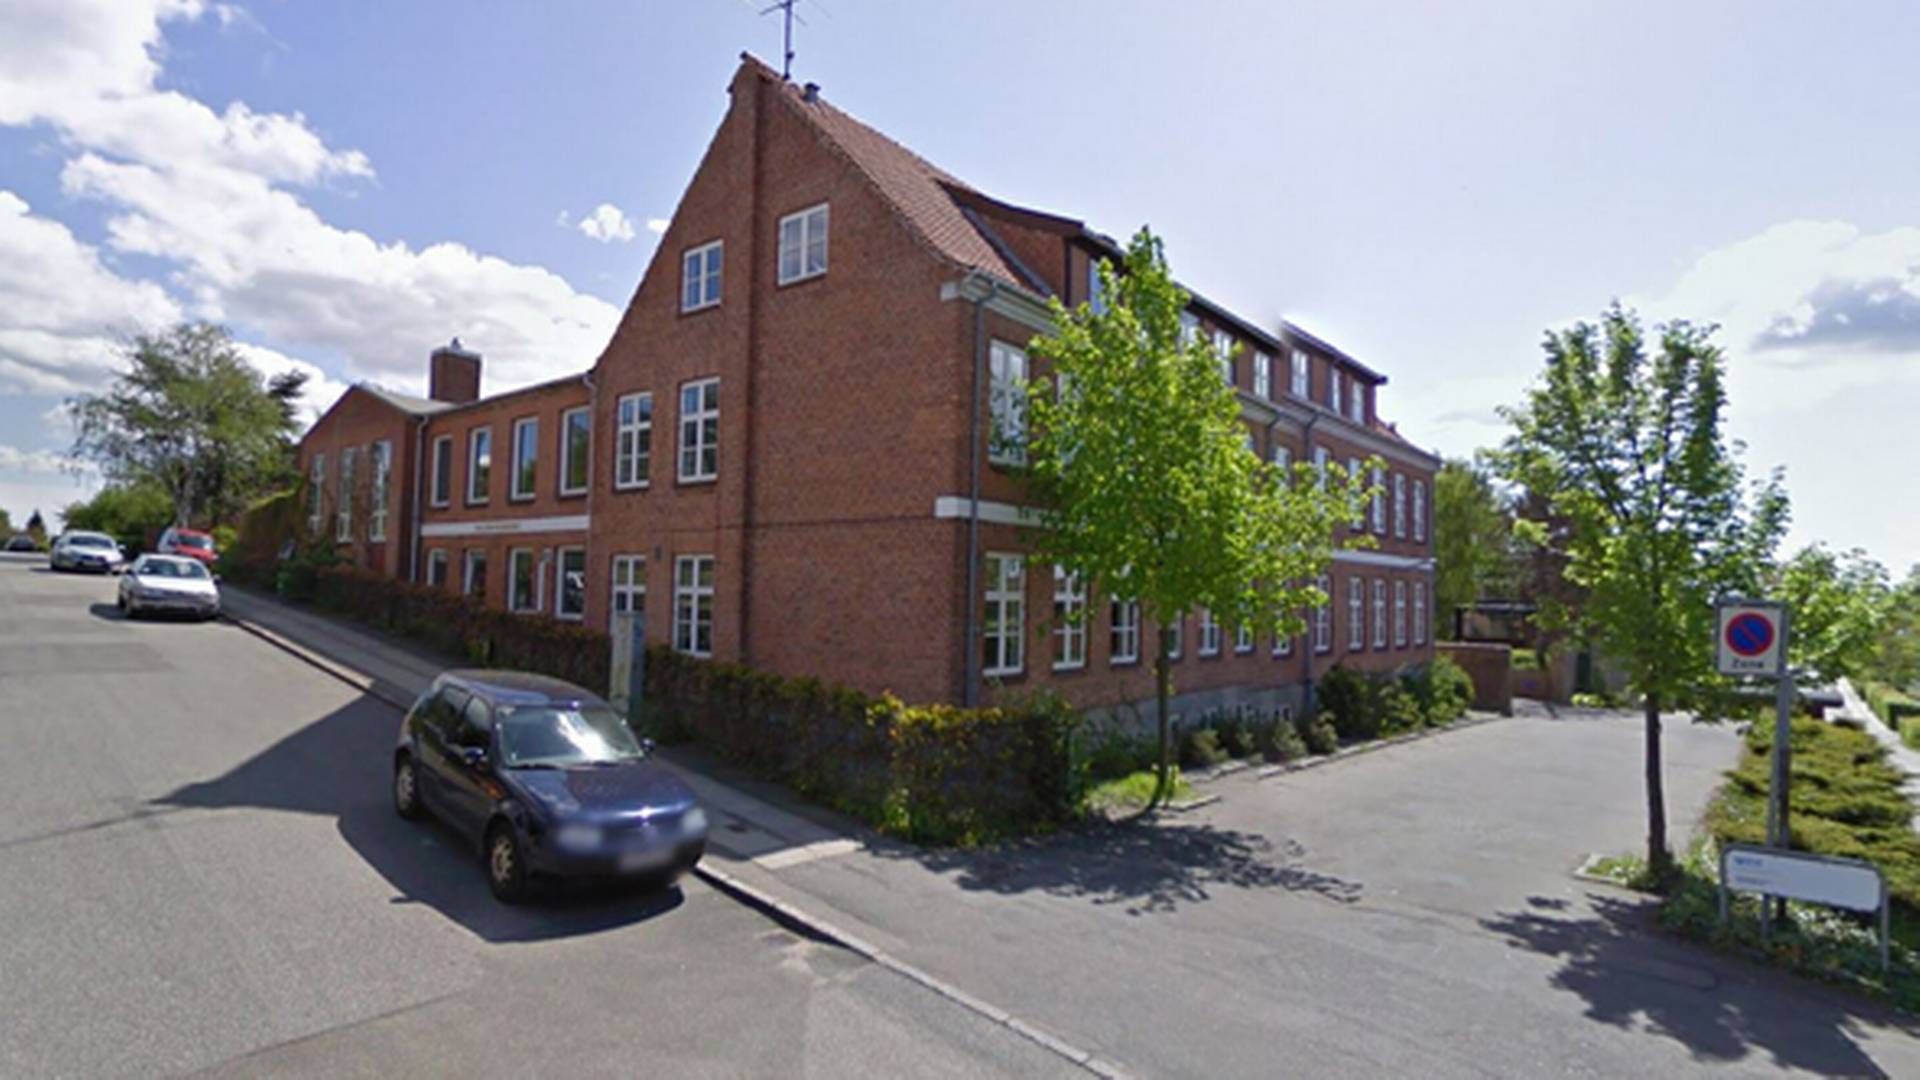 Den gamle skolebygning fra 1922 i Ballerup. På bygningen er navnet "Ballerup-Seminariet" påført med guldbogstaver. Billedet er fra 2009. | Foto: Google Maps